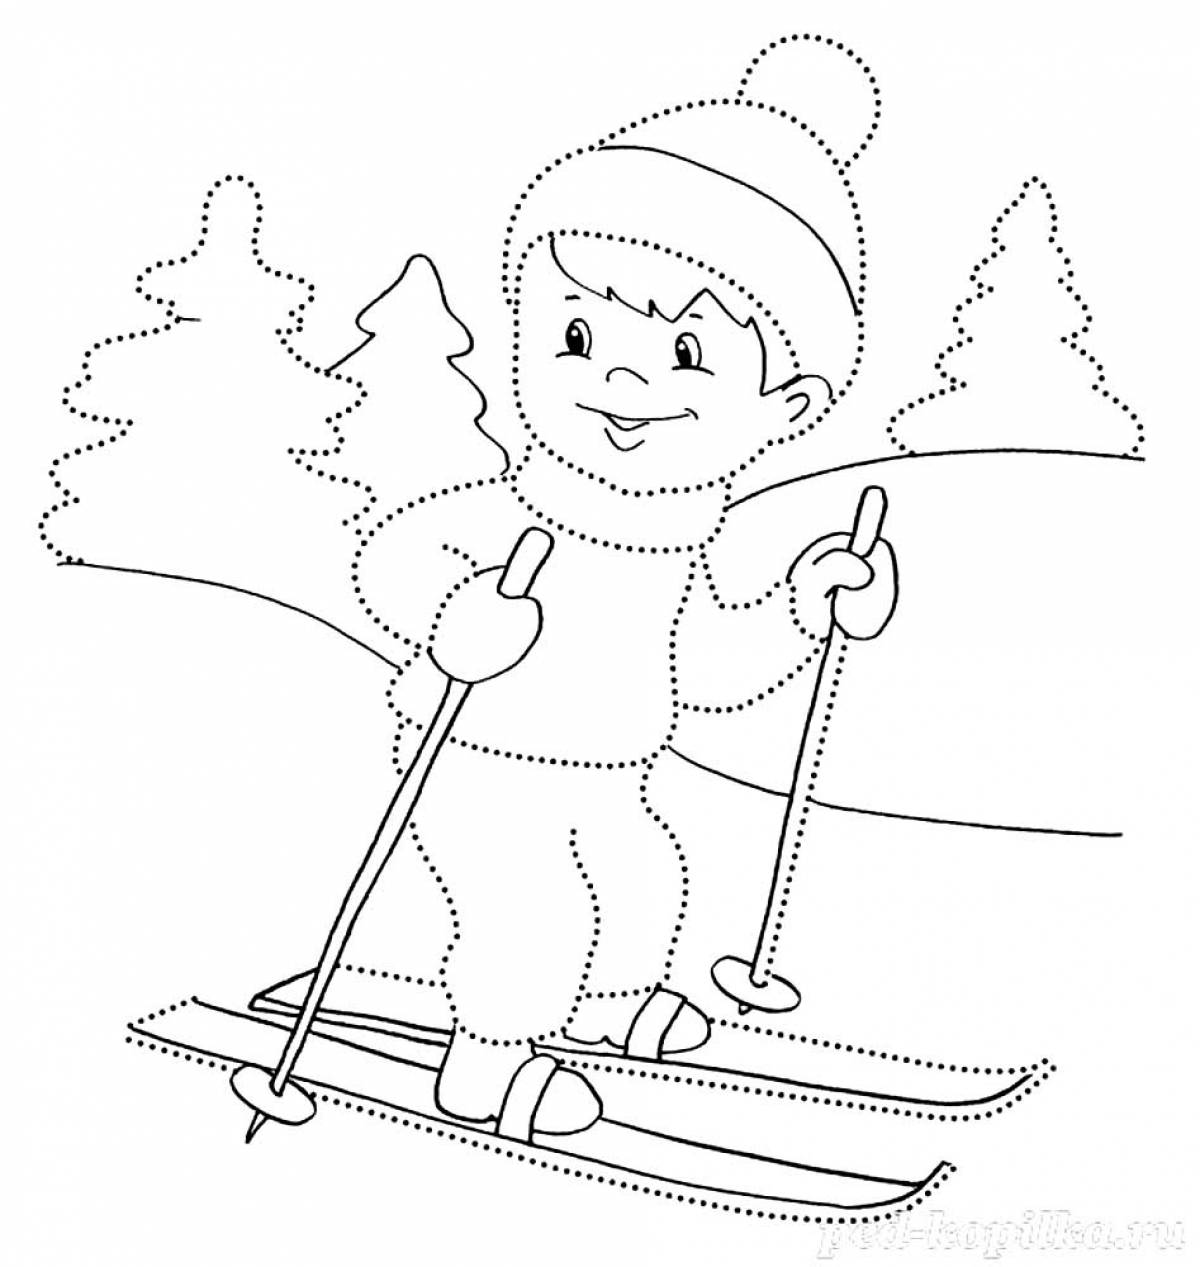 Coloring book wonderful skier for kids